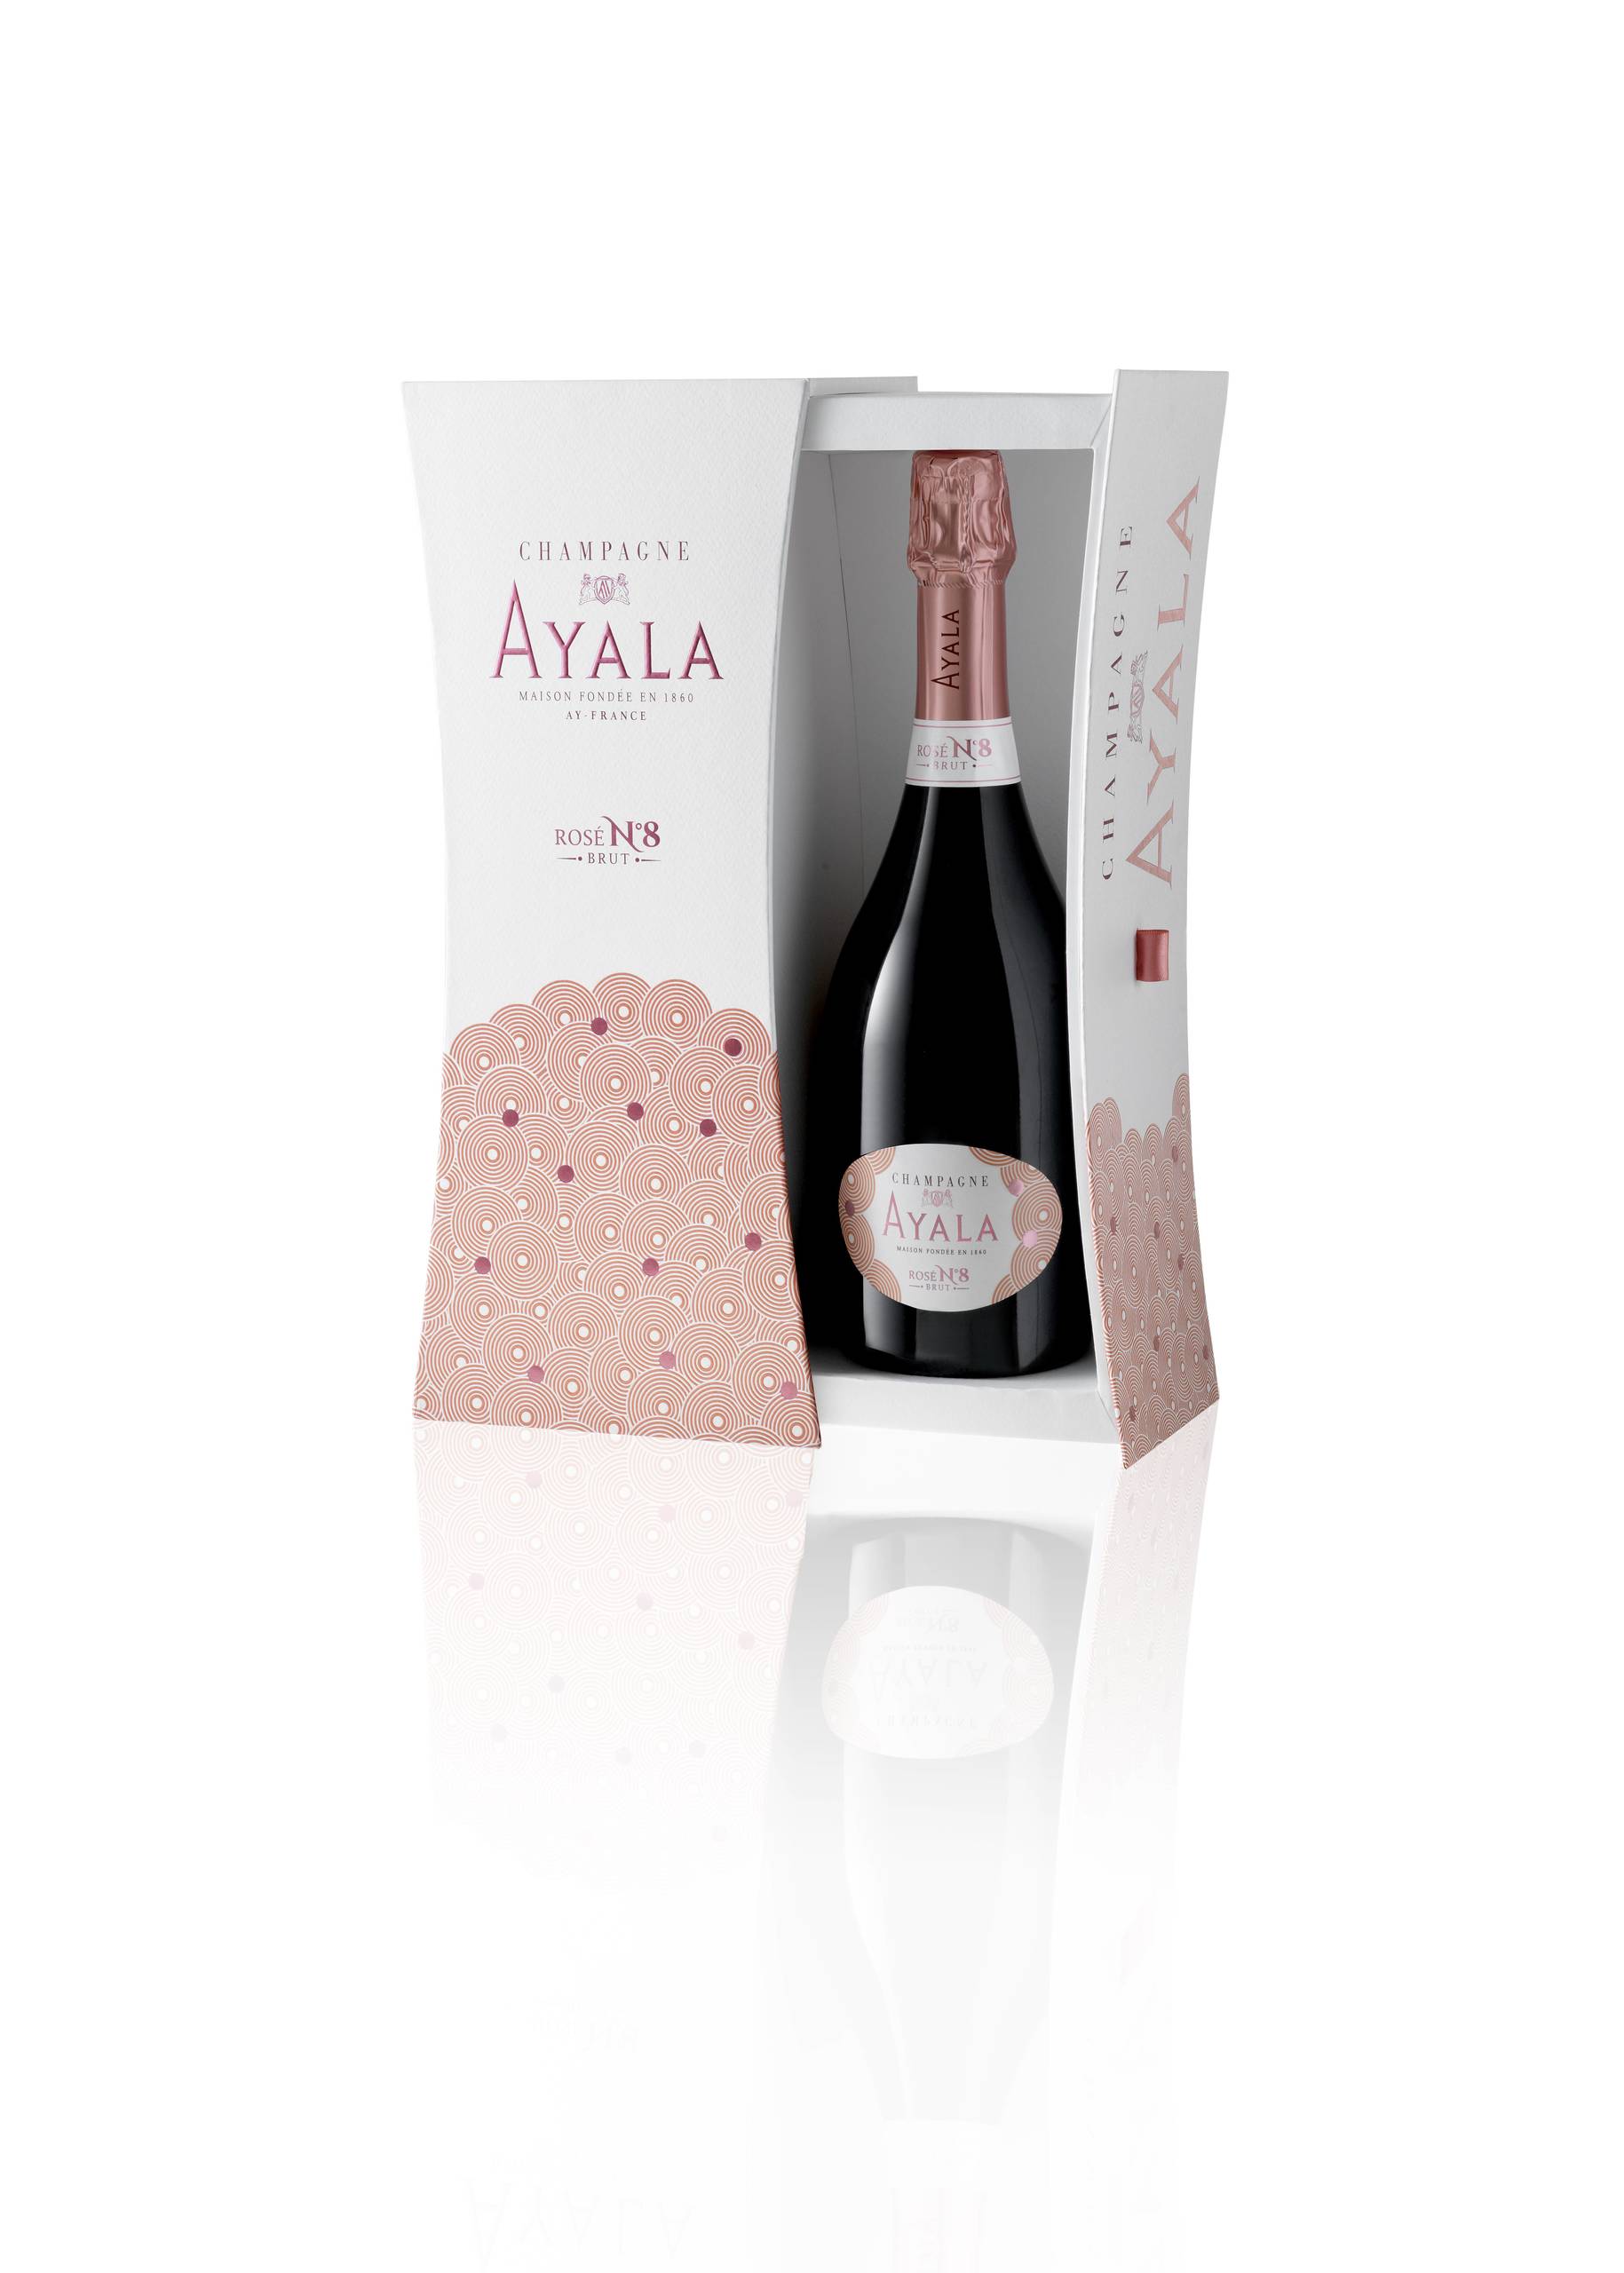 The Collection AYALA - Champagne Ayala